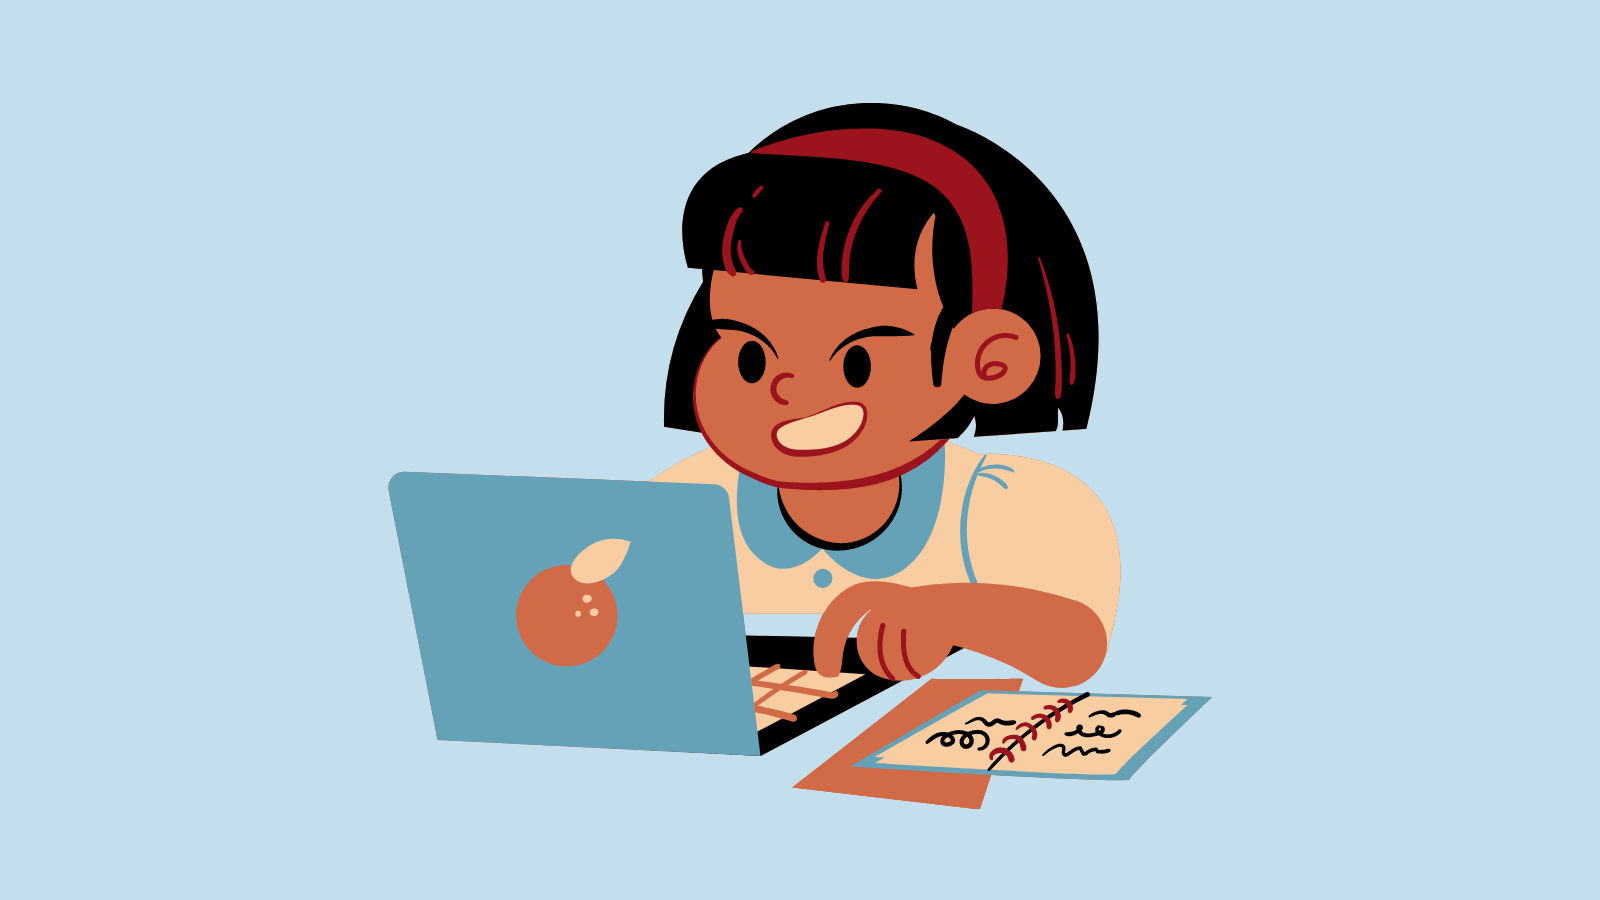 Child on Computer